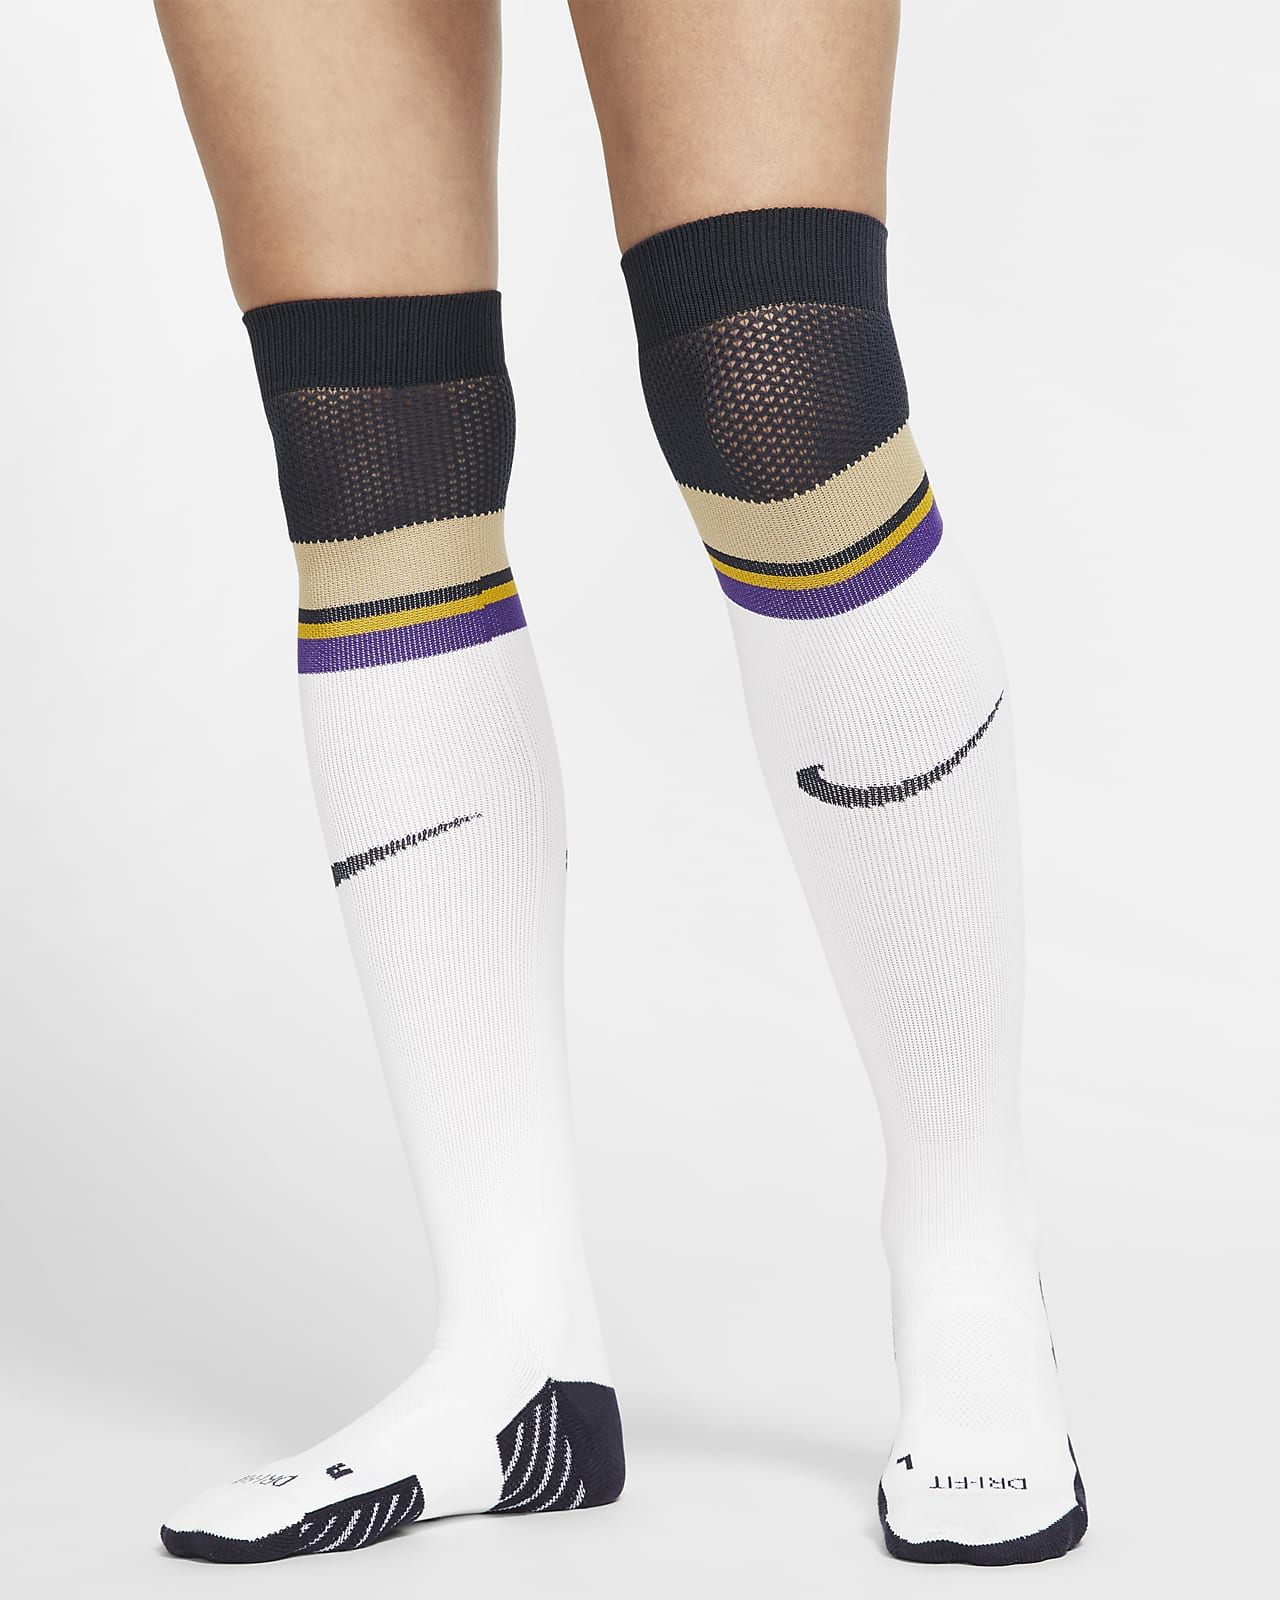 Nike x Sacai Women's Knee-High Socks 